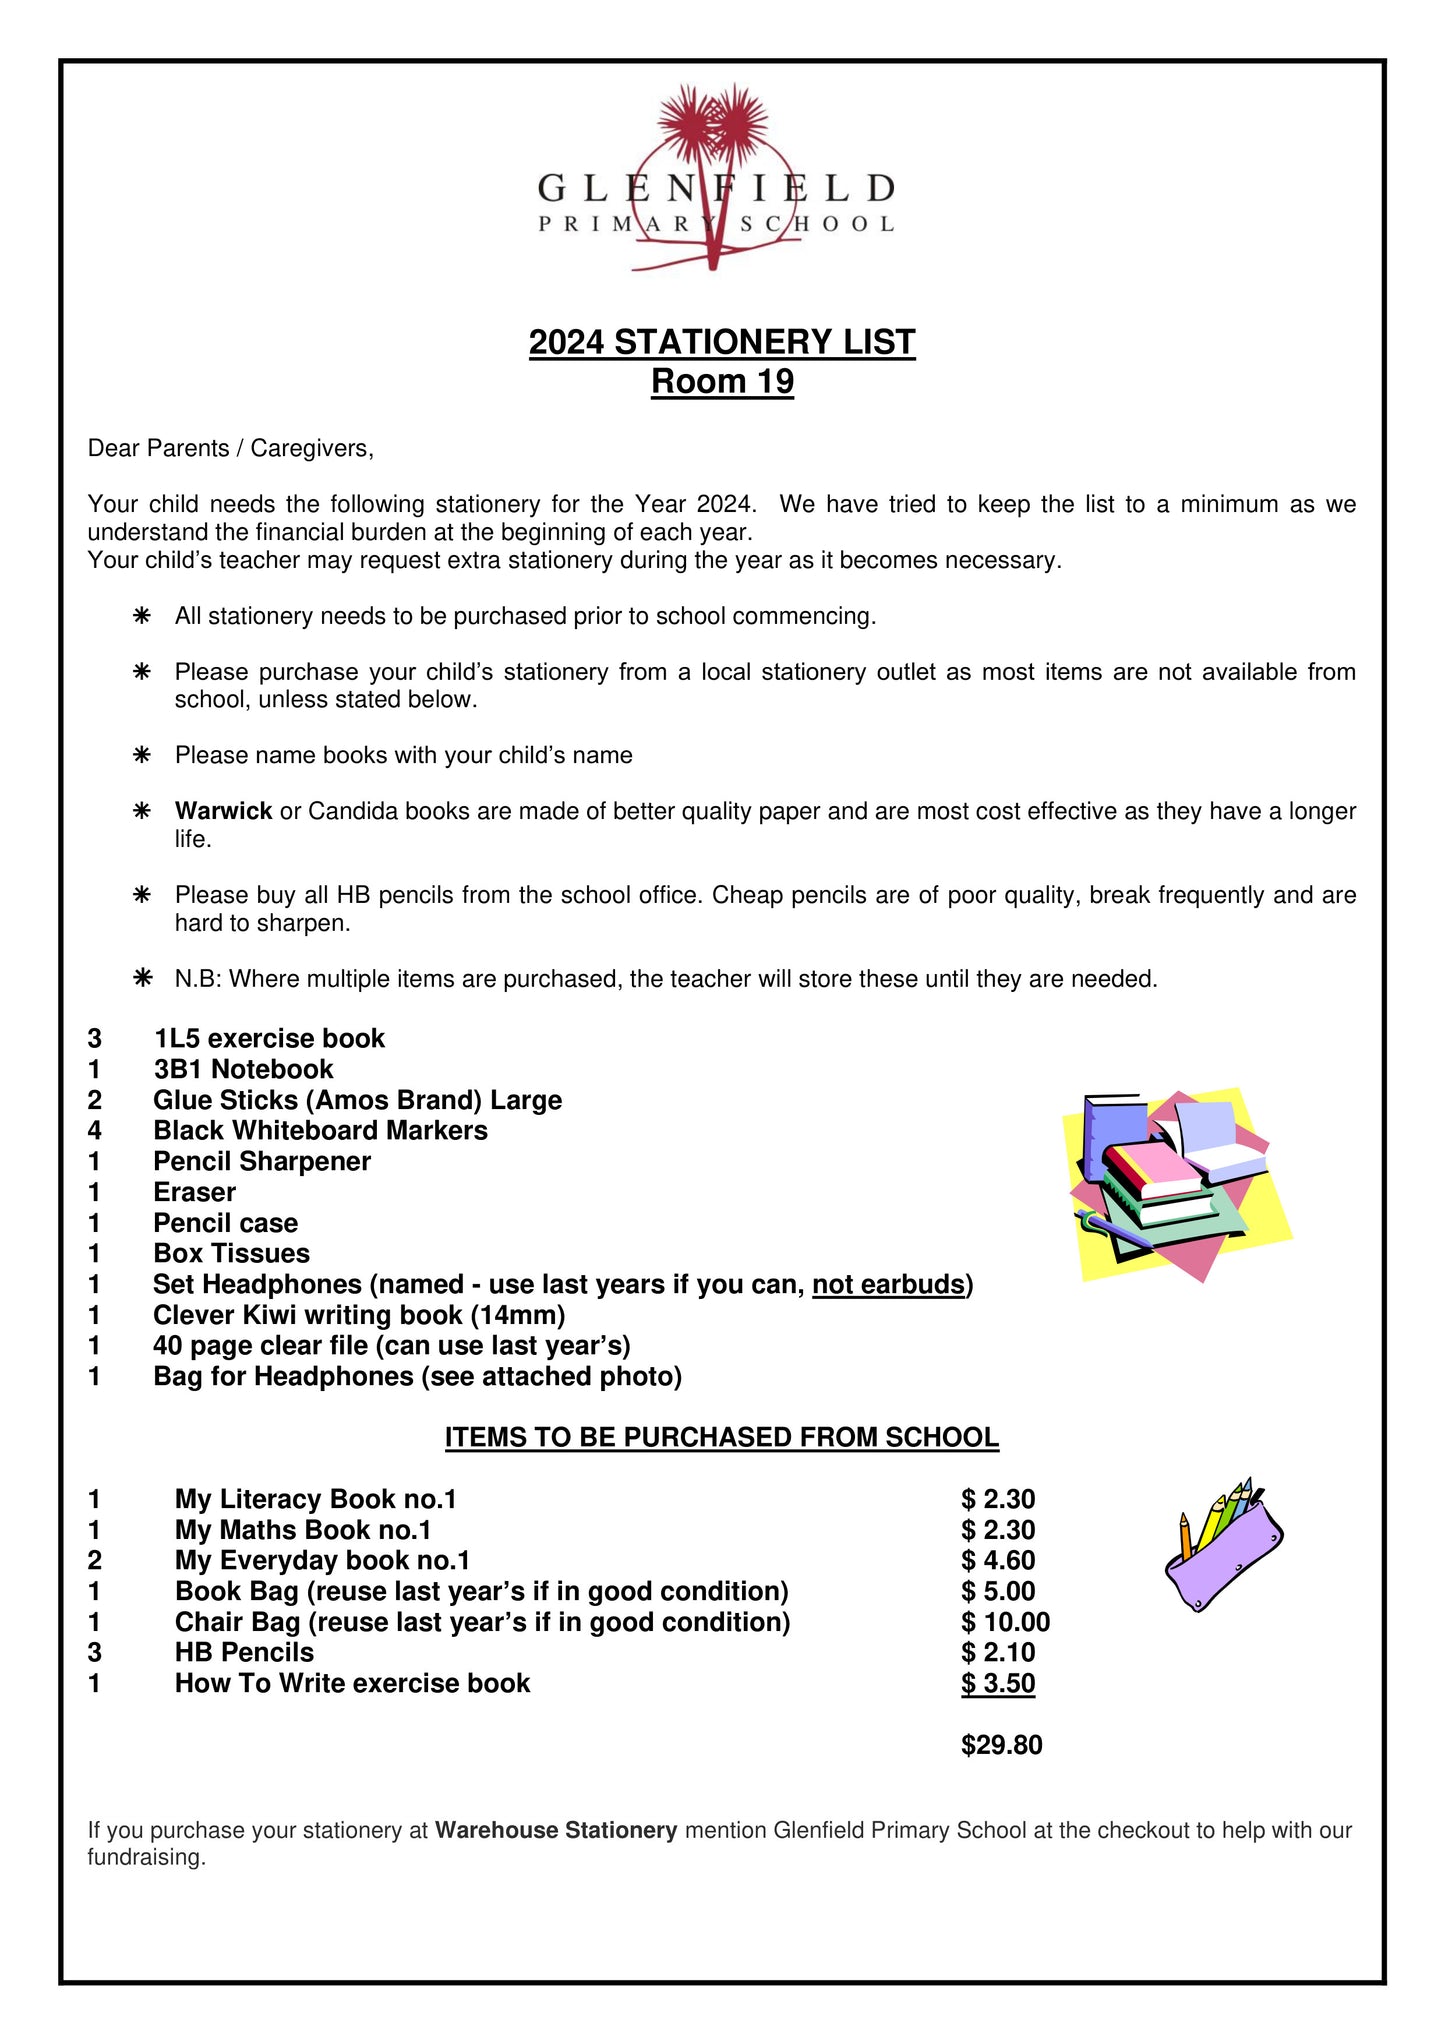 Glenfield Primary School Stationery List 2024 Room 19